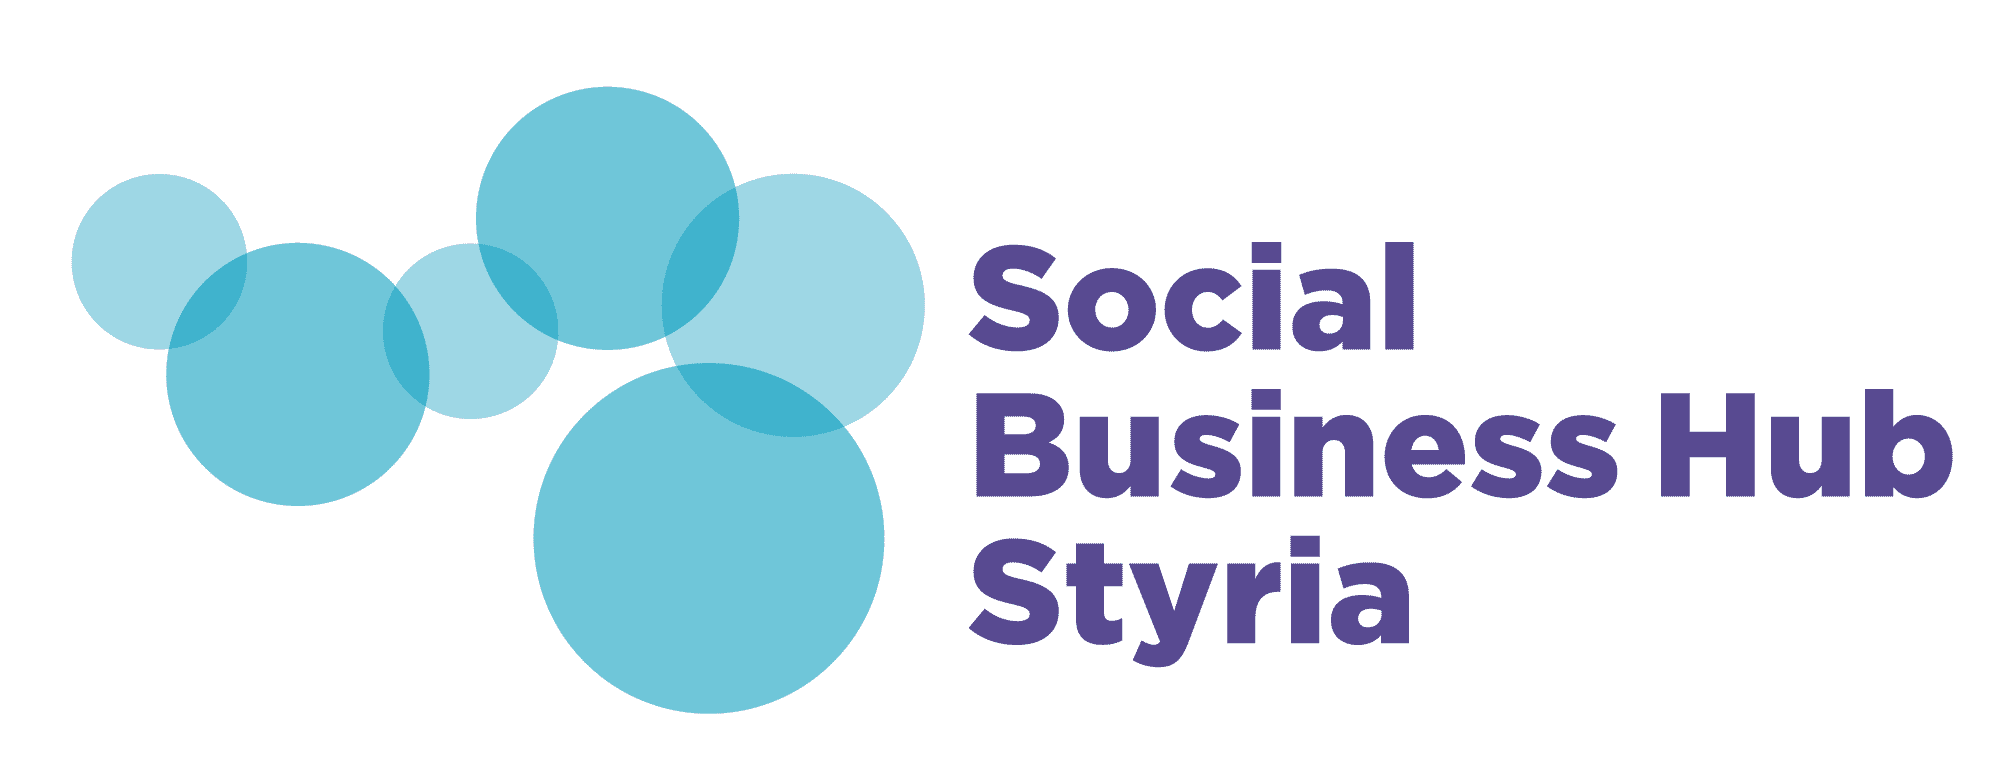 Social Business Hub Styria logo